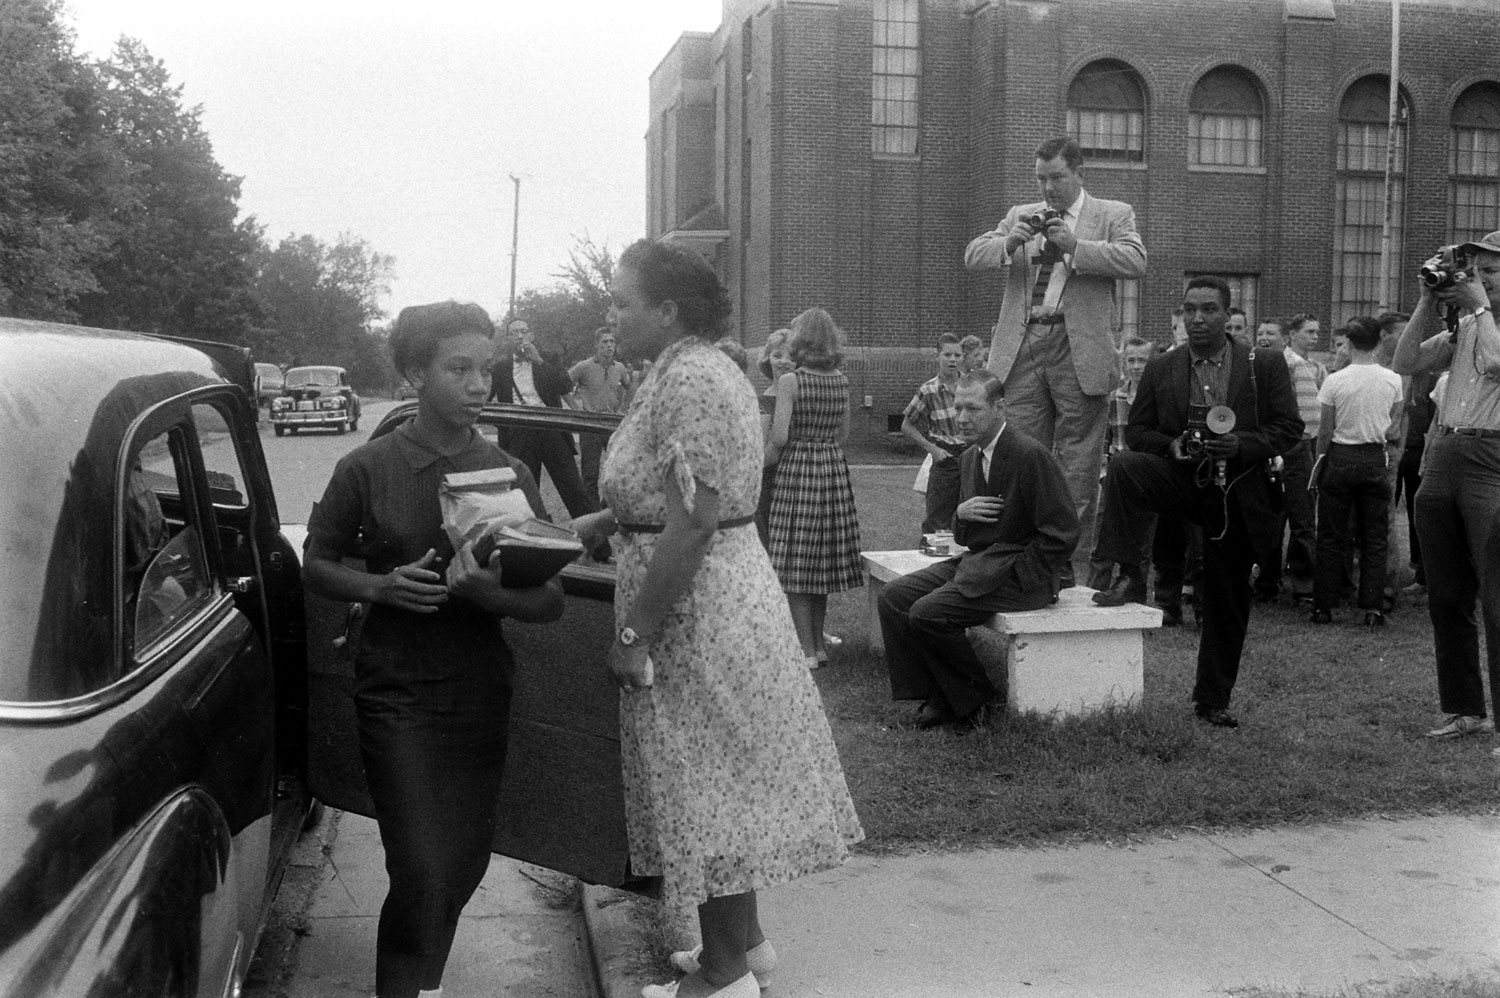 At a school in Van Buren, Arkansas, African-American students arrive in front of a crowd of journalists and other onlookers, 1957.